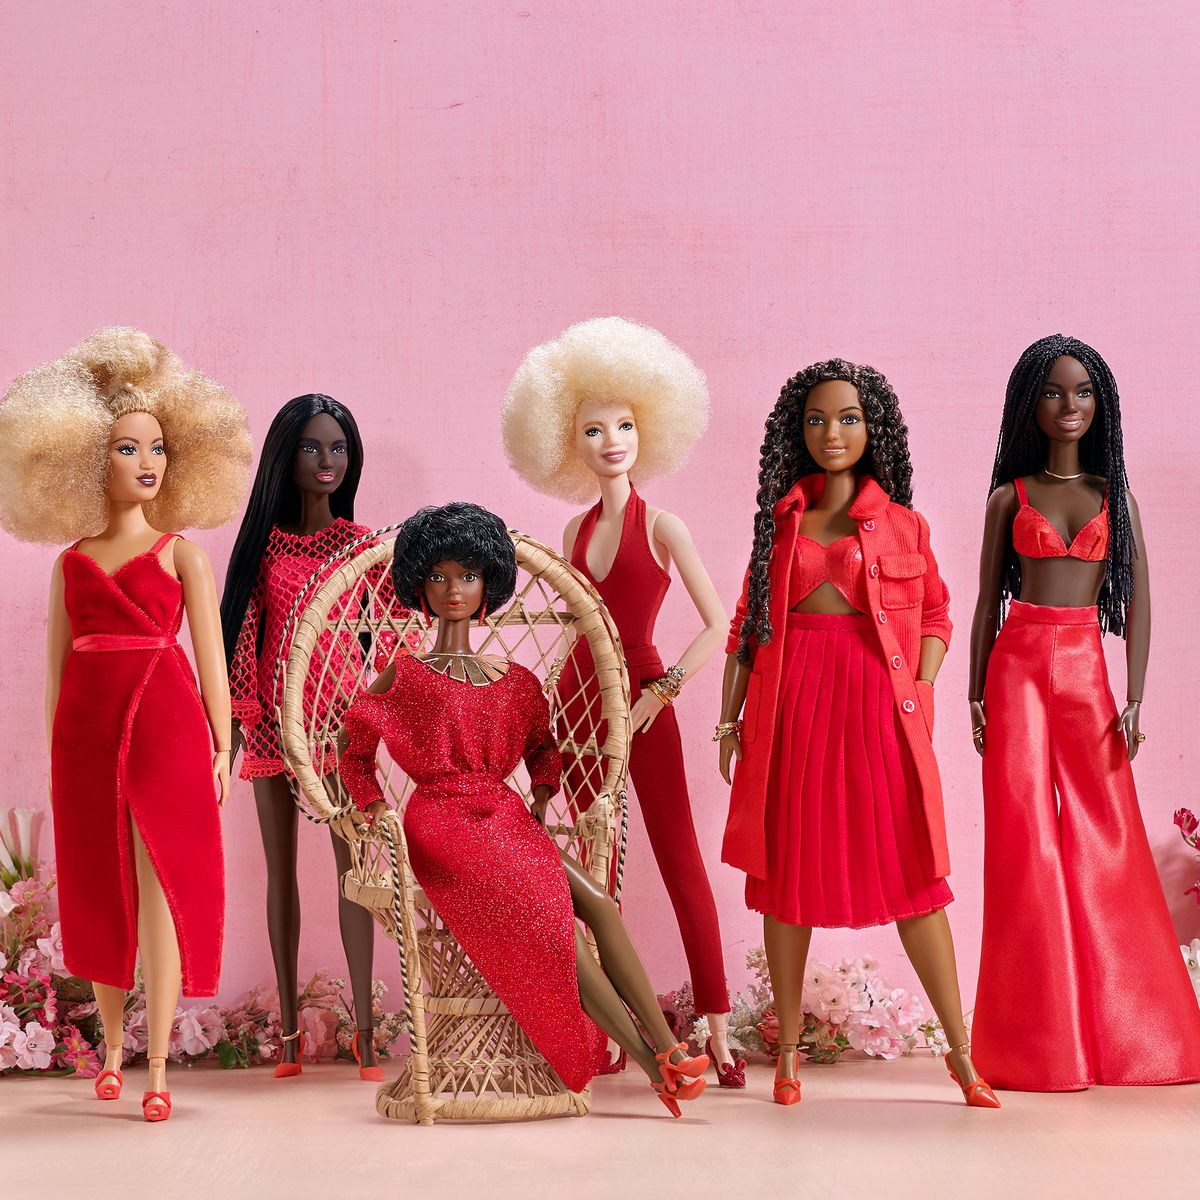 Shiona Turini's Black Barbie Celebrates Black Beauty